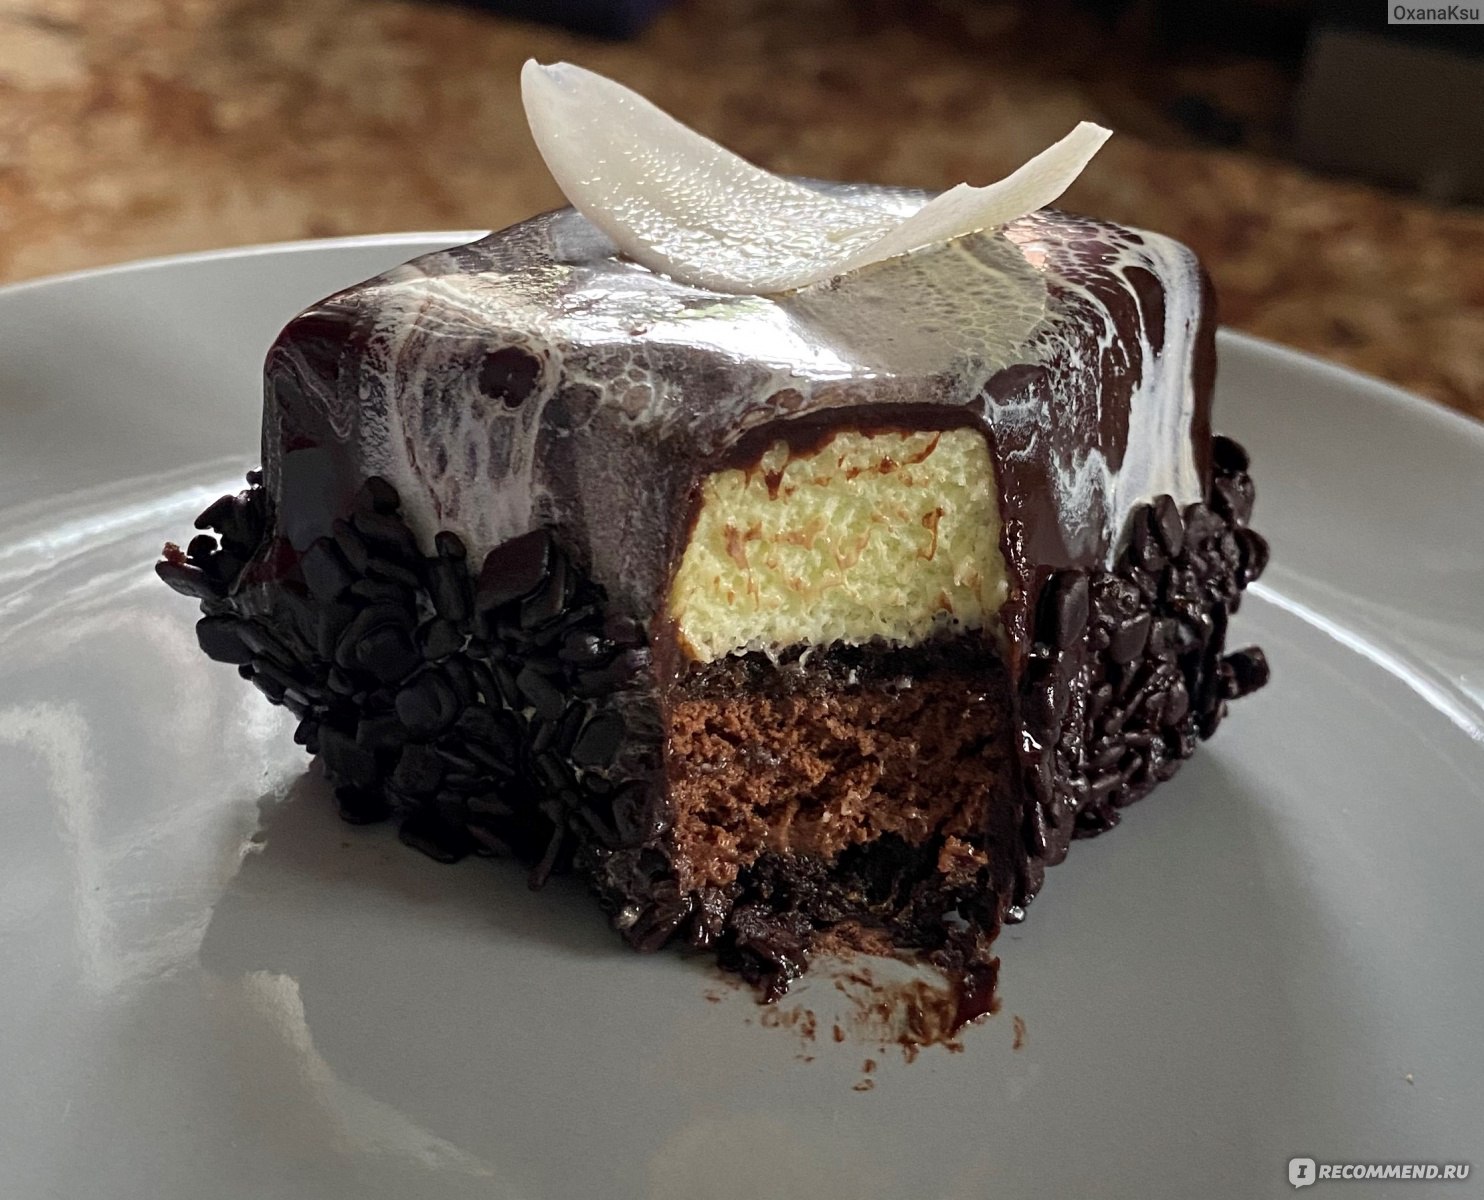 Пирожное 2 шоколада. Торт два шоколада Леберже. Торты Leberge два шоколада. Тортик двойной шоколад. Пирожное два шоколада.